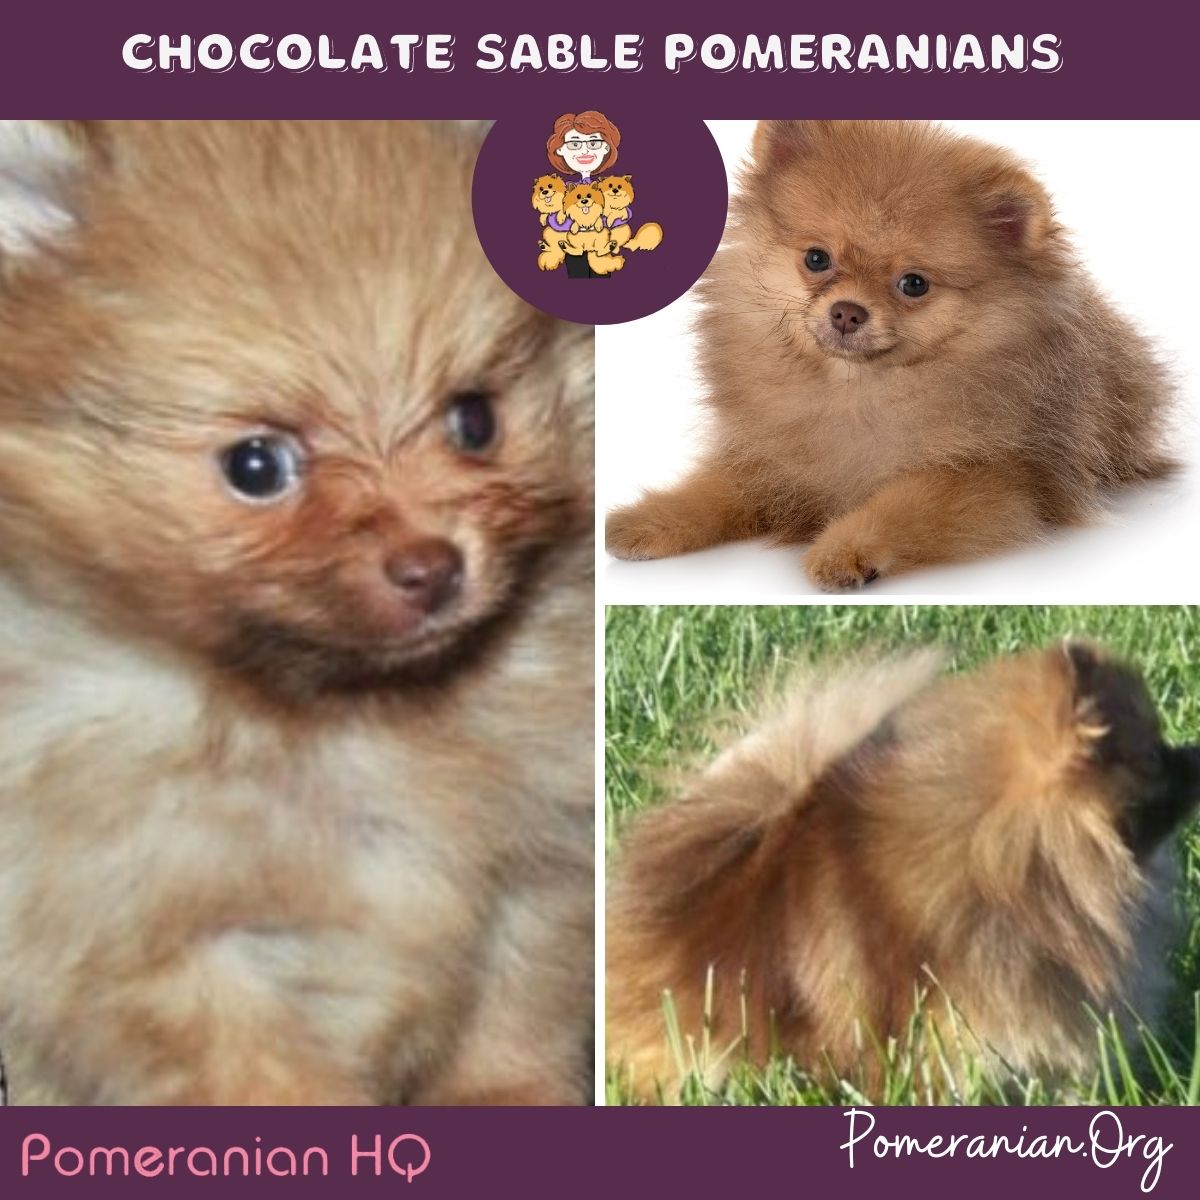 Chocolate-Sable-Pomeranians